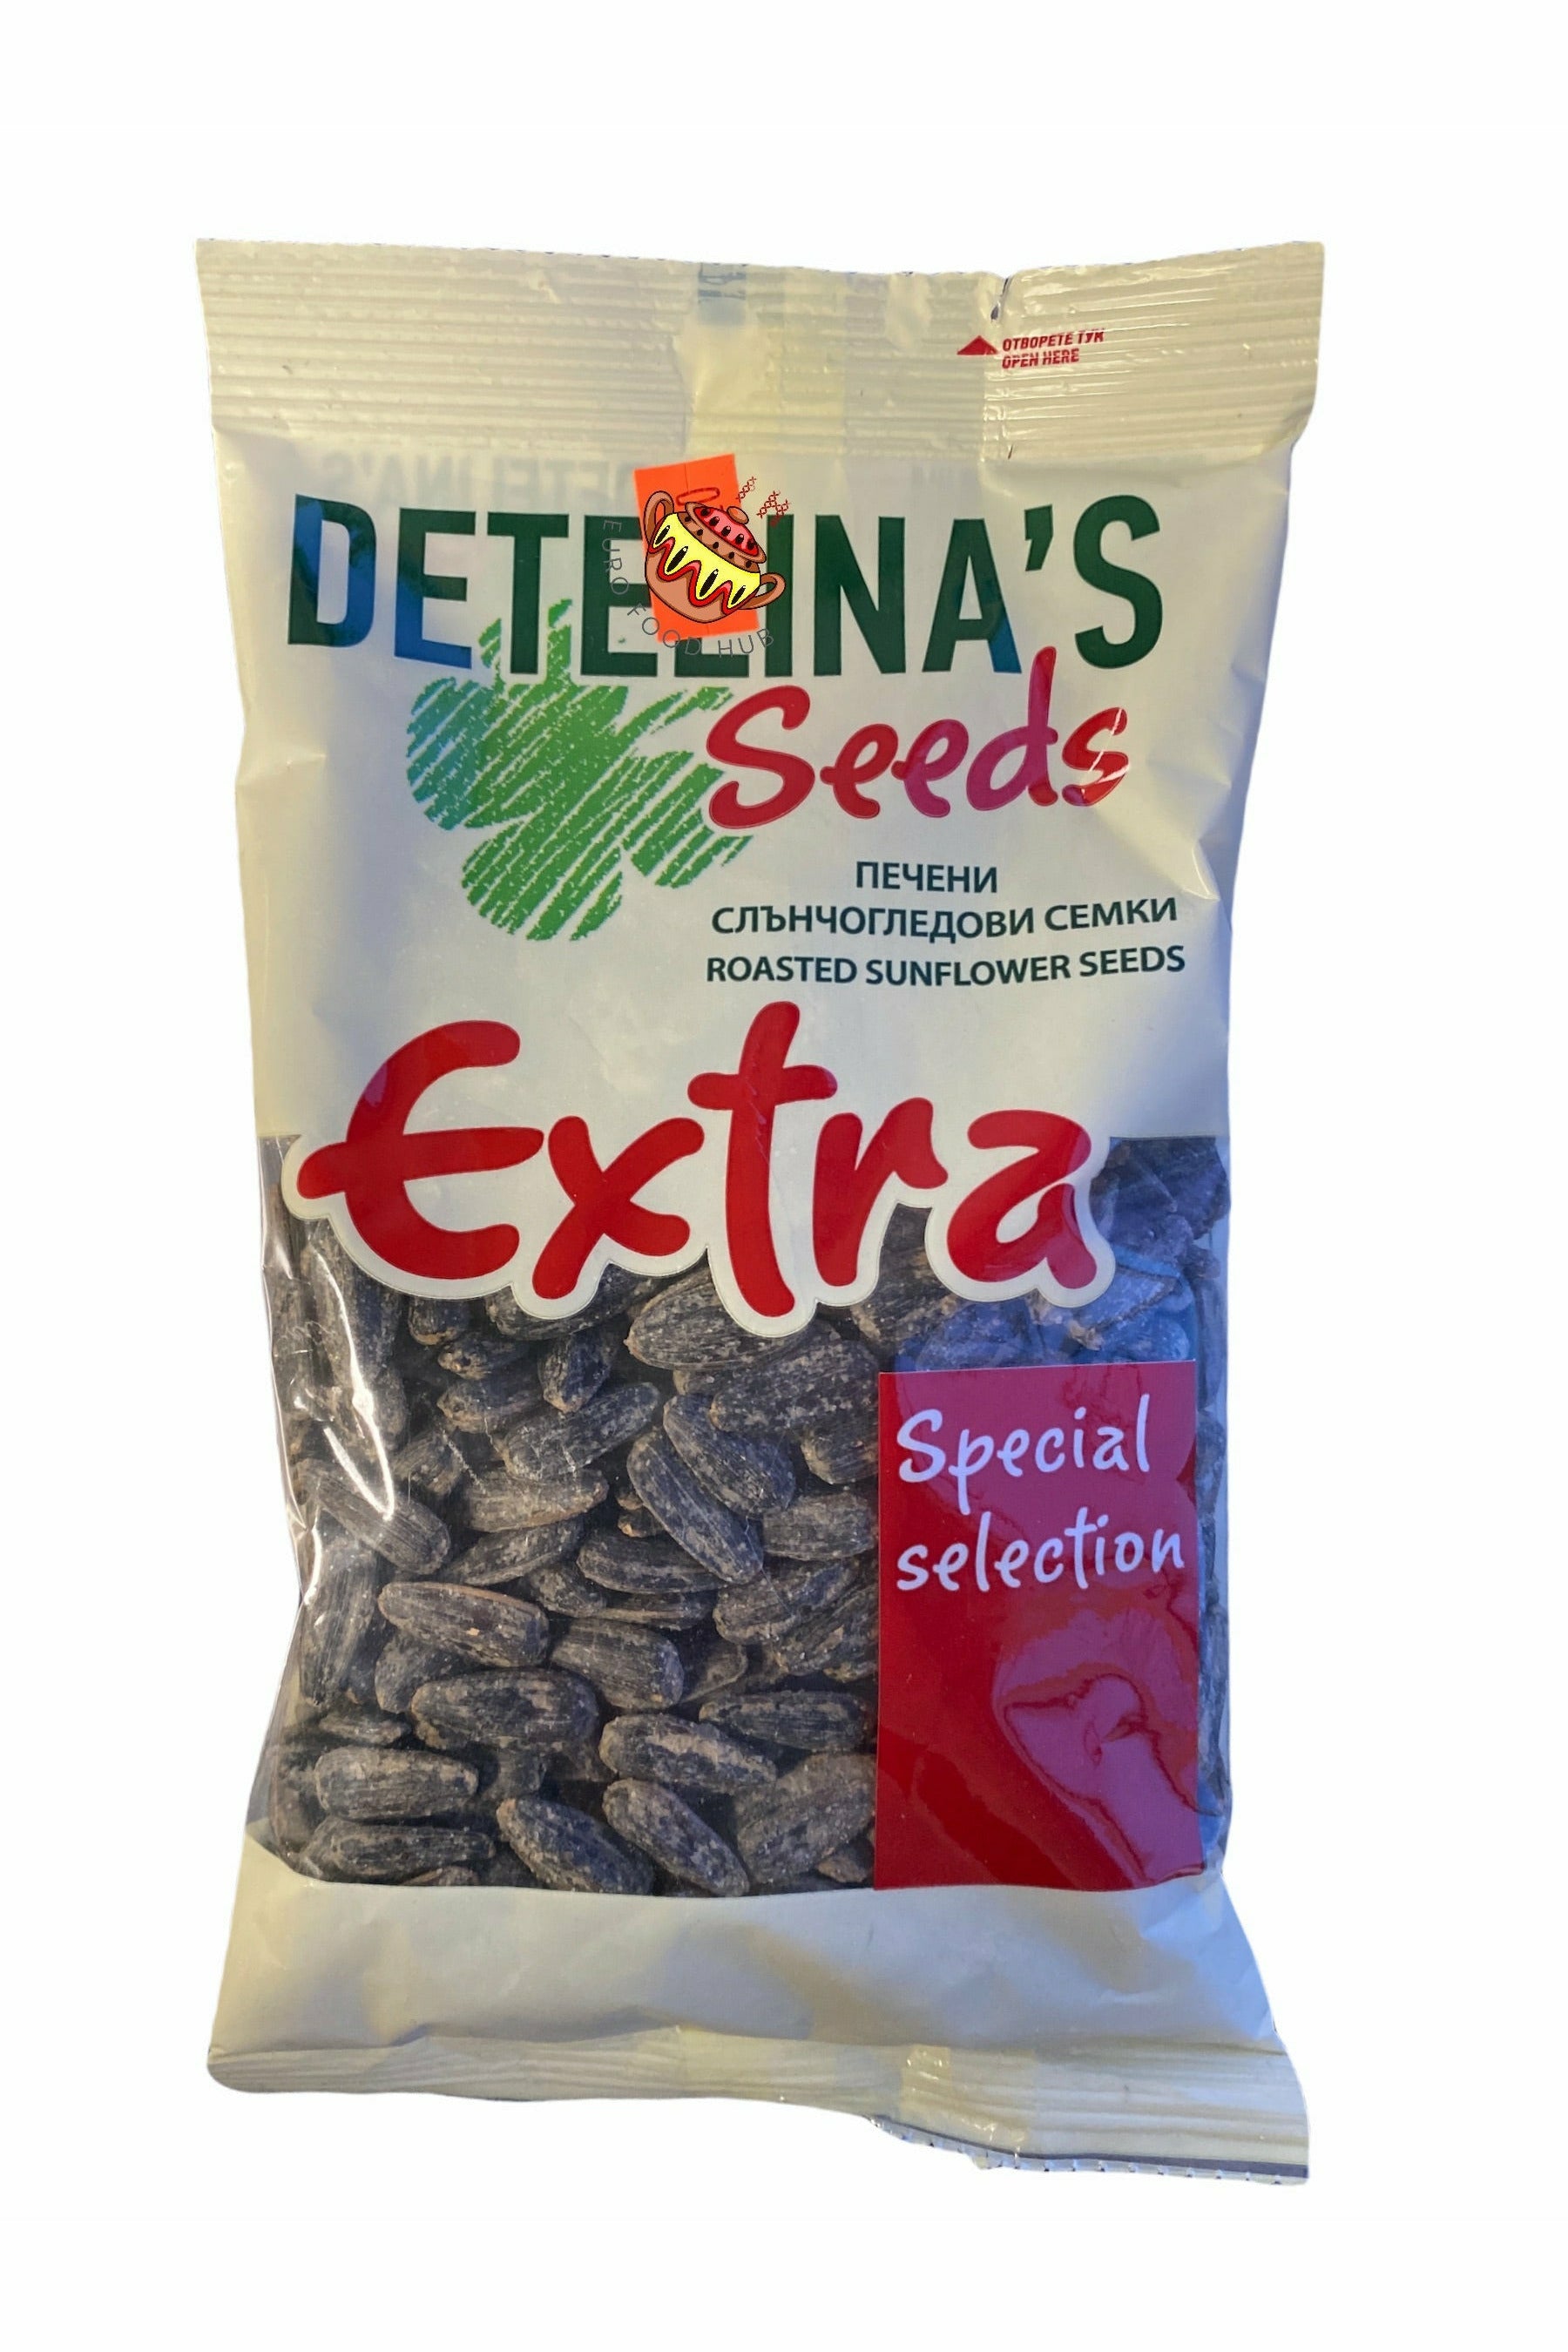 Sunflower Seeds "Detelina Extra" - 100g